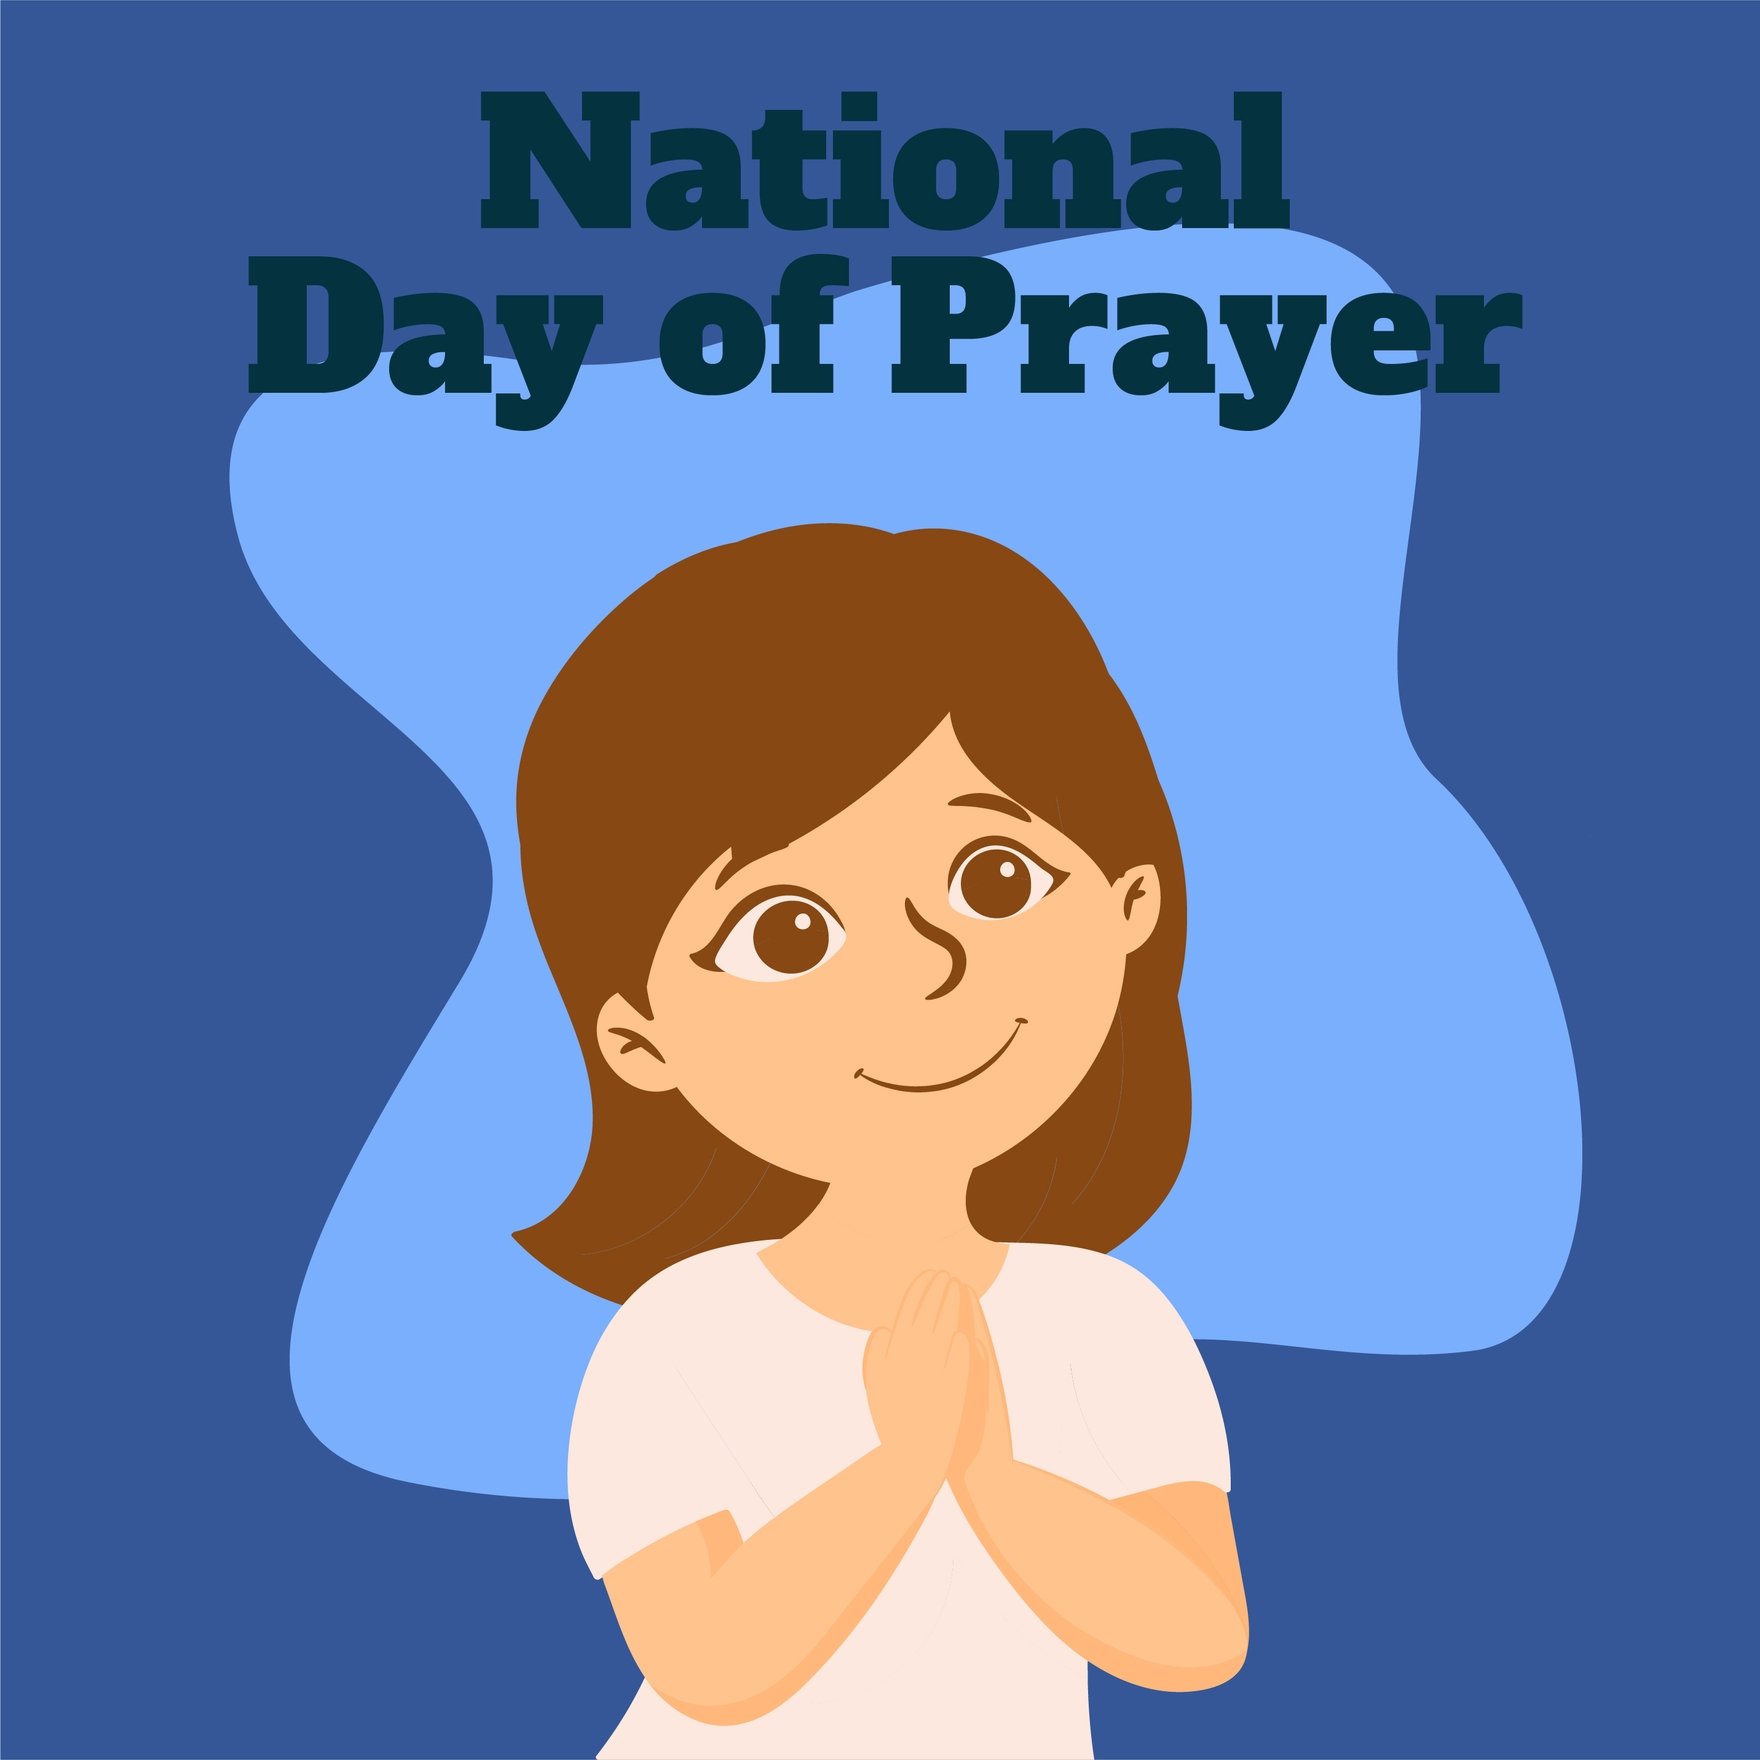 National Day of Prayer Cartoon Vector in EPS, Illustrator, JPG, PSD